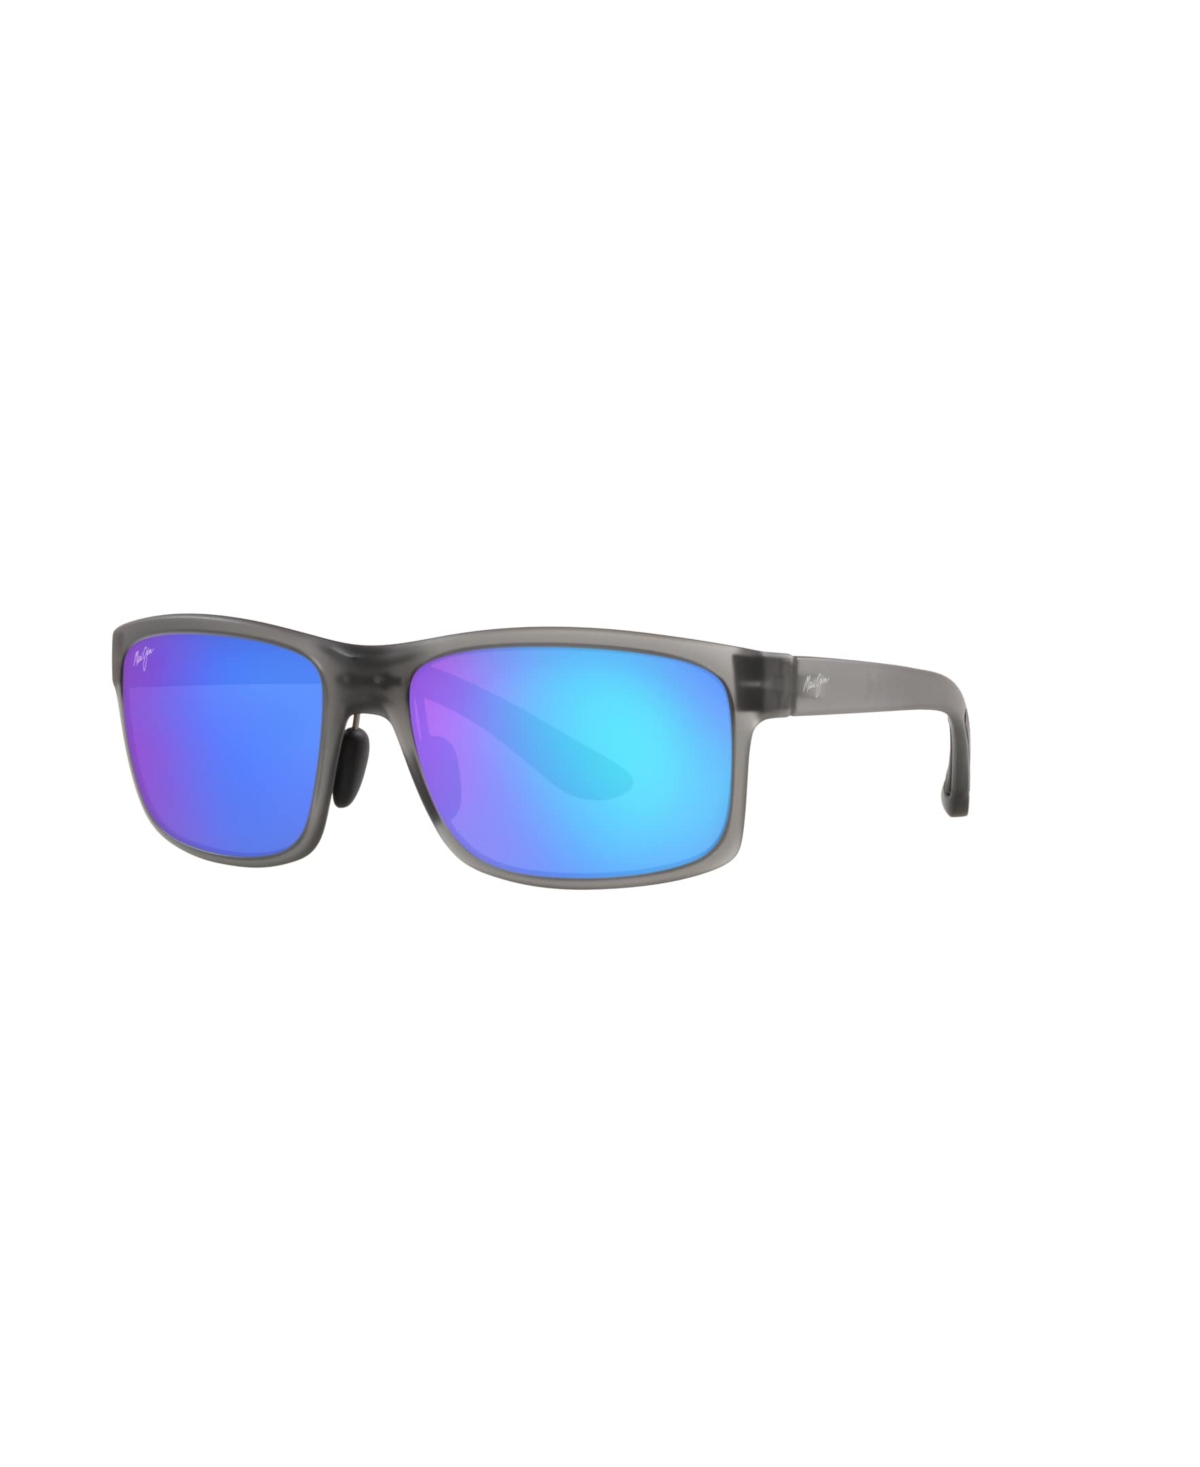 Unisex Polarized Sunglasses, 439 Pokowai Arch - Gray